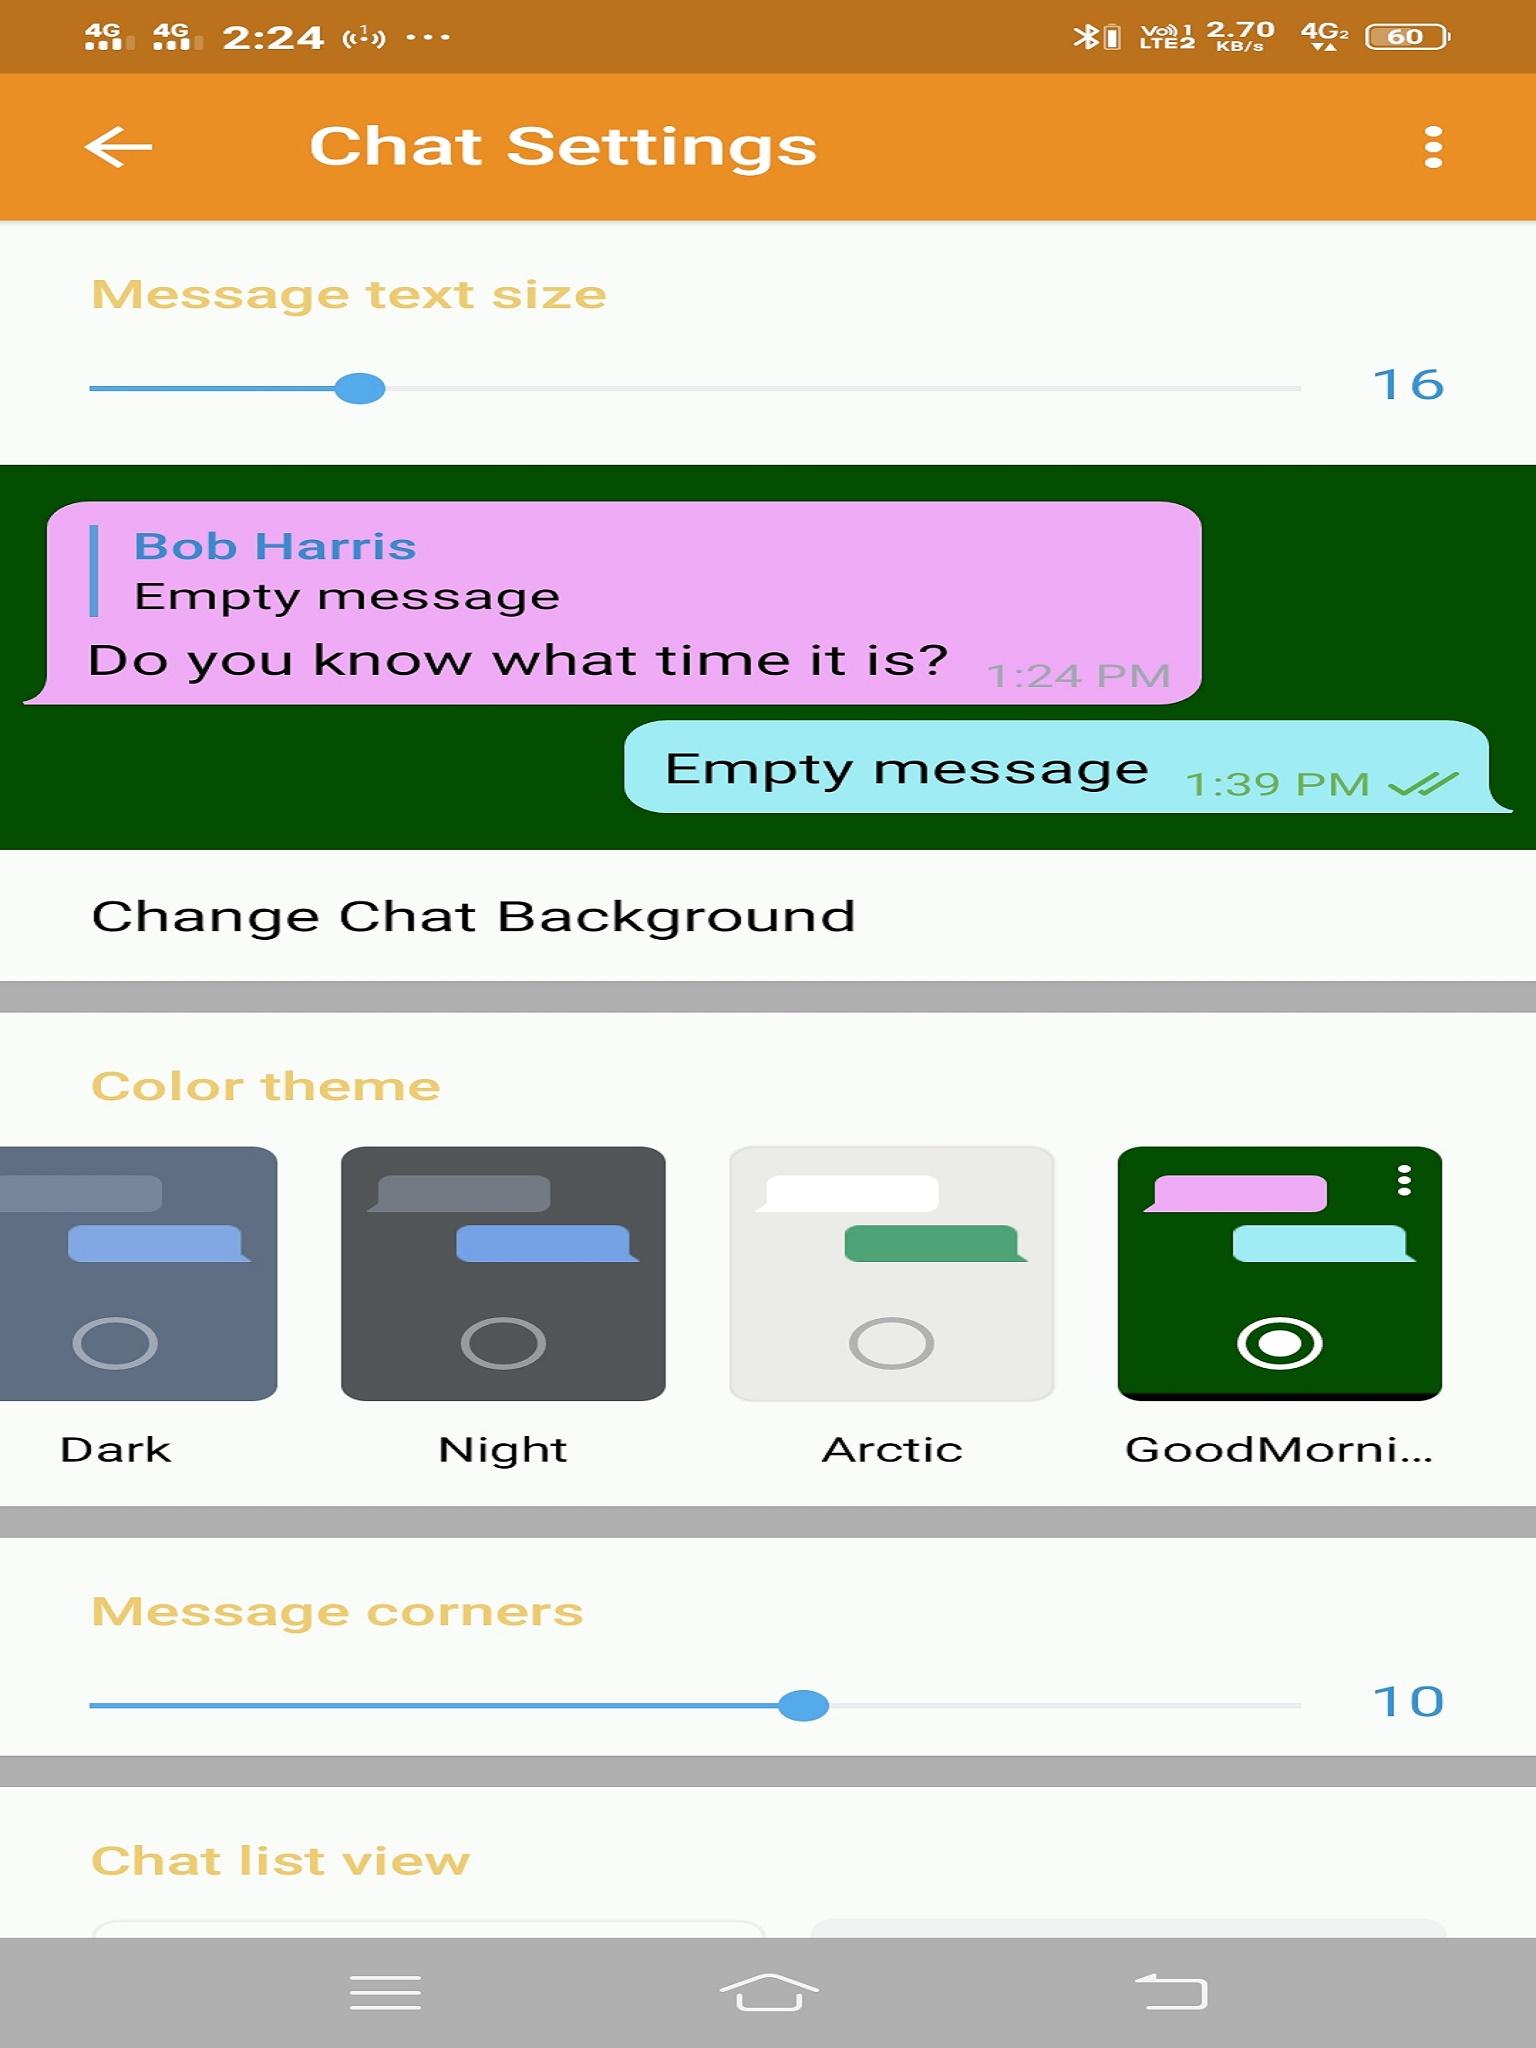 GoodMorning Messenger - New Telegram 1.0.25 Screenshot 10